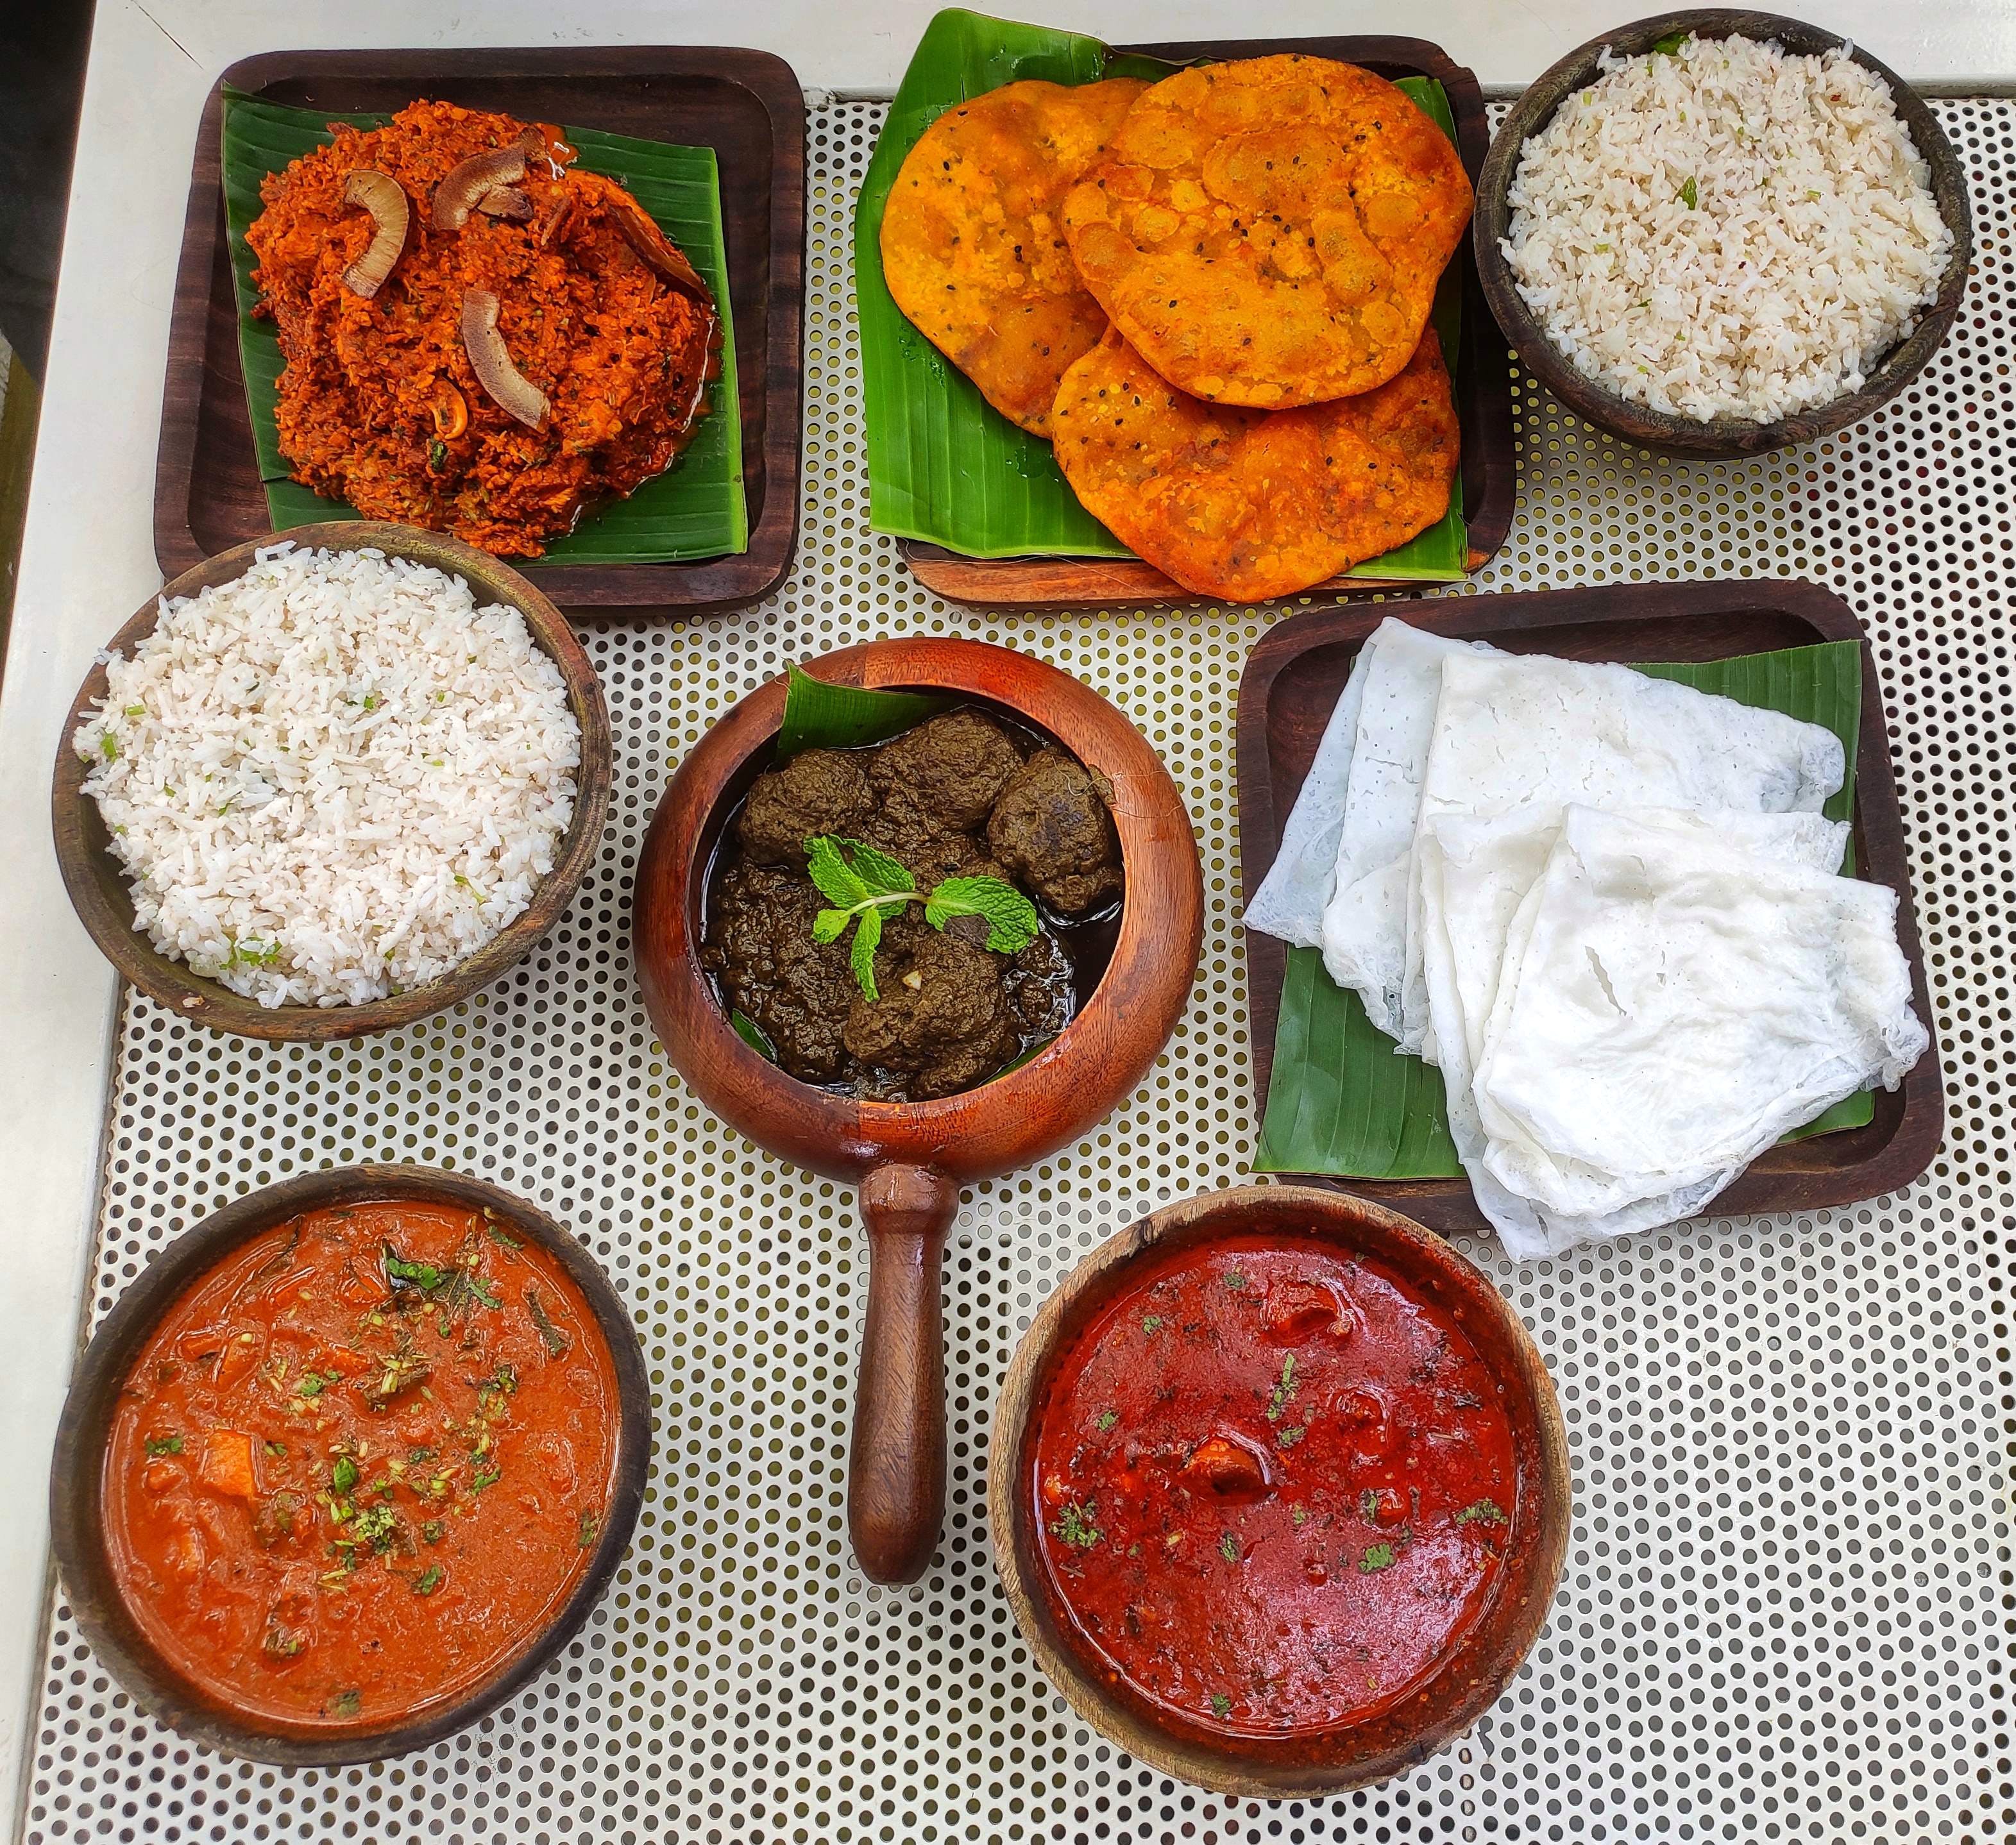 Dish,Food,Cuisine,Ingredient,Produce,Muhammara,Jalfrezi,Indian cuisine,Curry,Meal